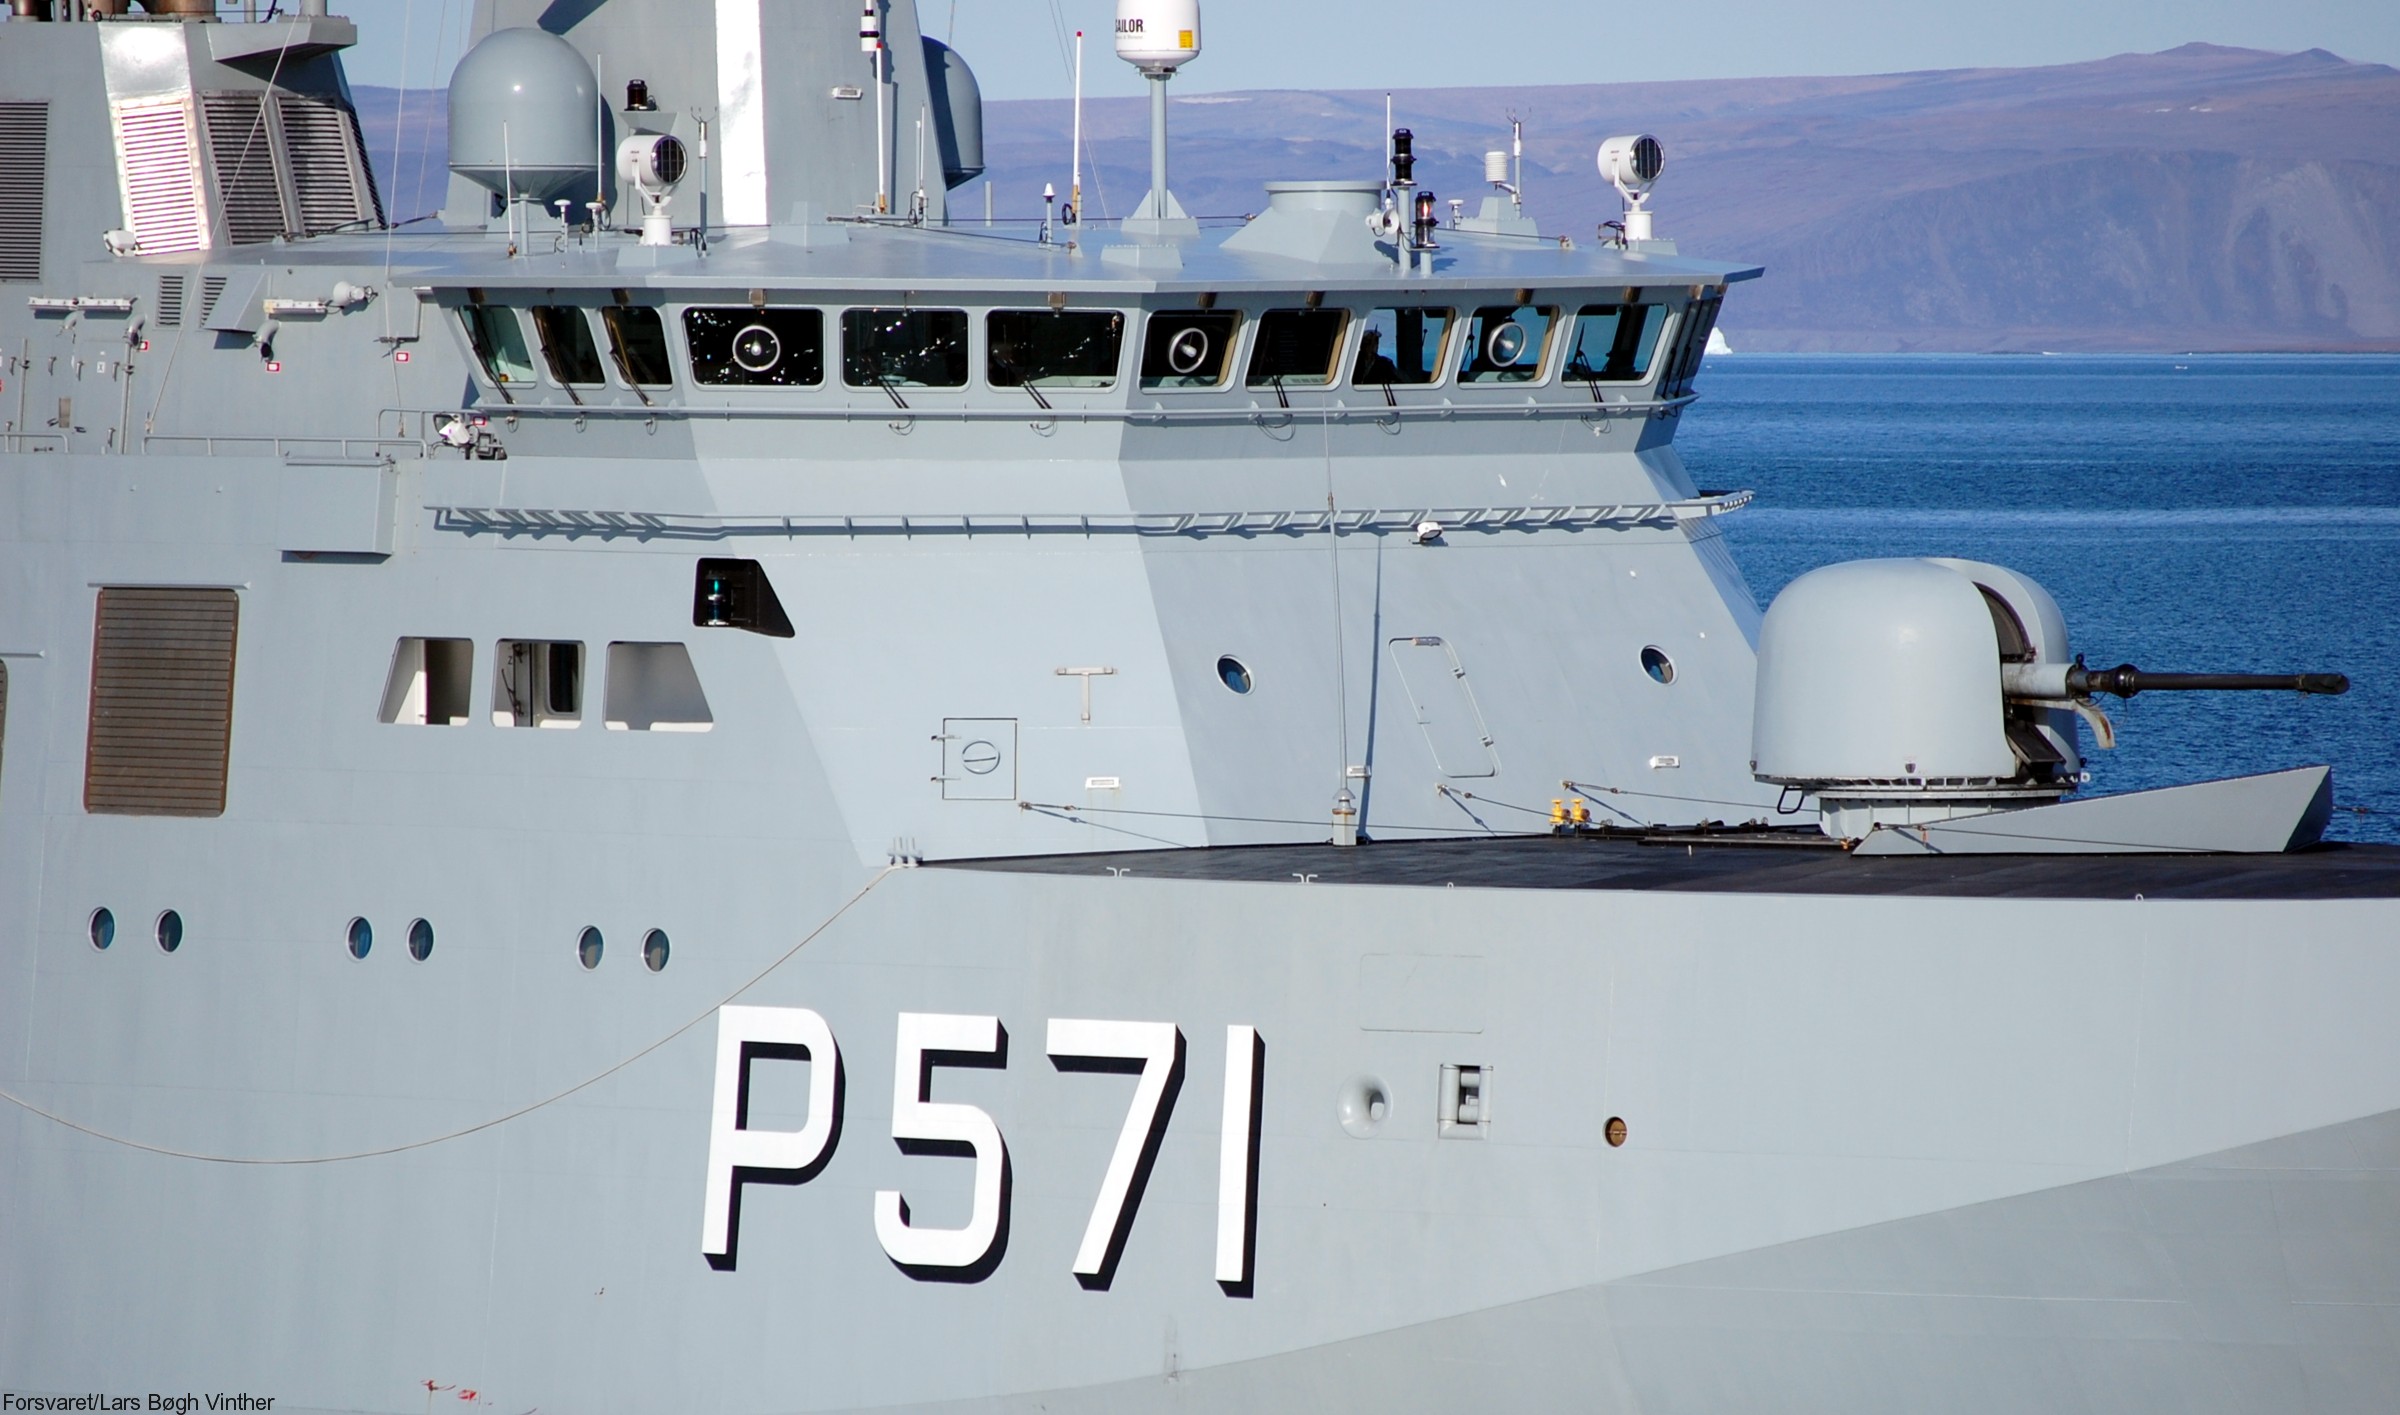 p-571 hdms ejnar mikkelsen knud rasmussen class offshore patrol vessel opv royal danish navy inspektionsfartøj 37 oto melara 76/62 gun